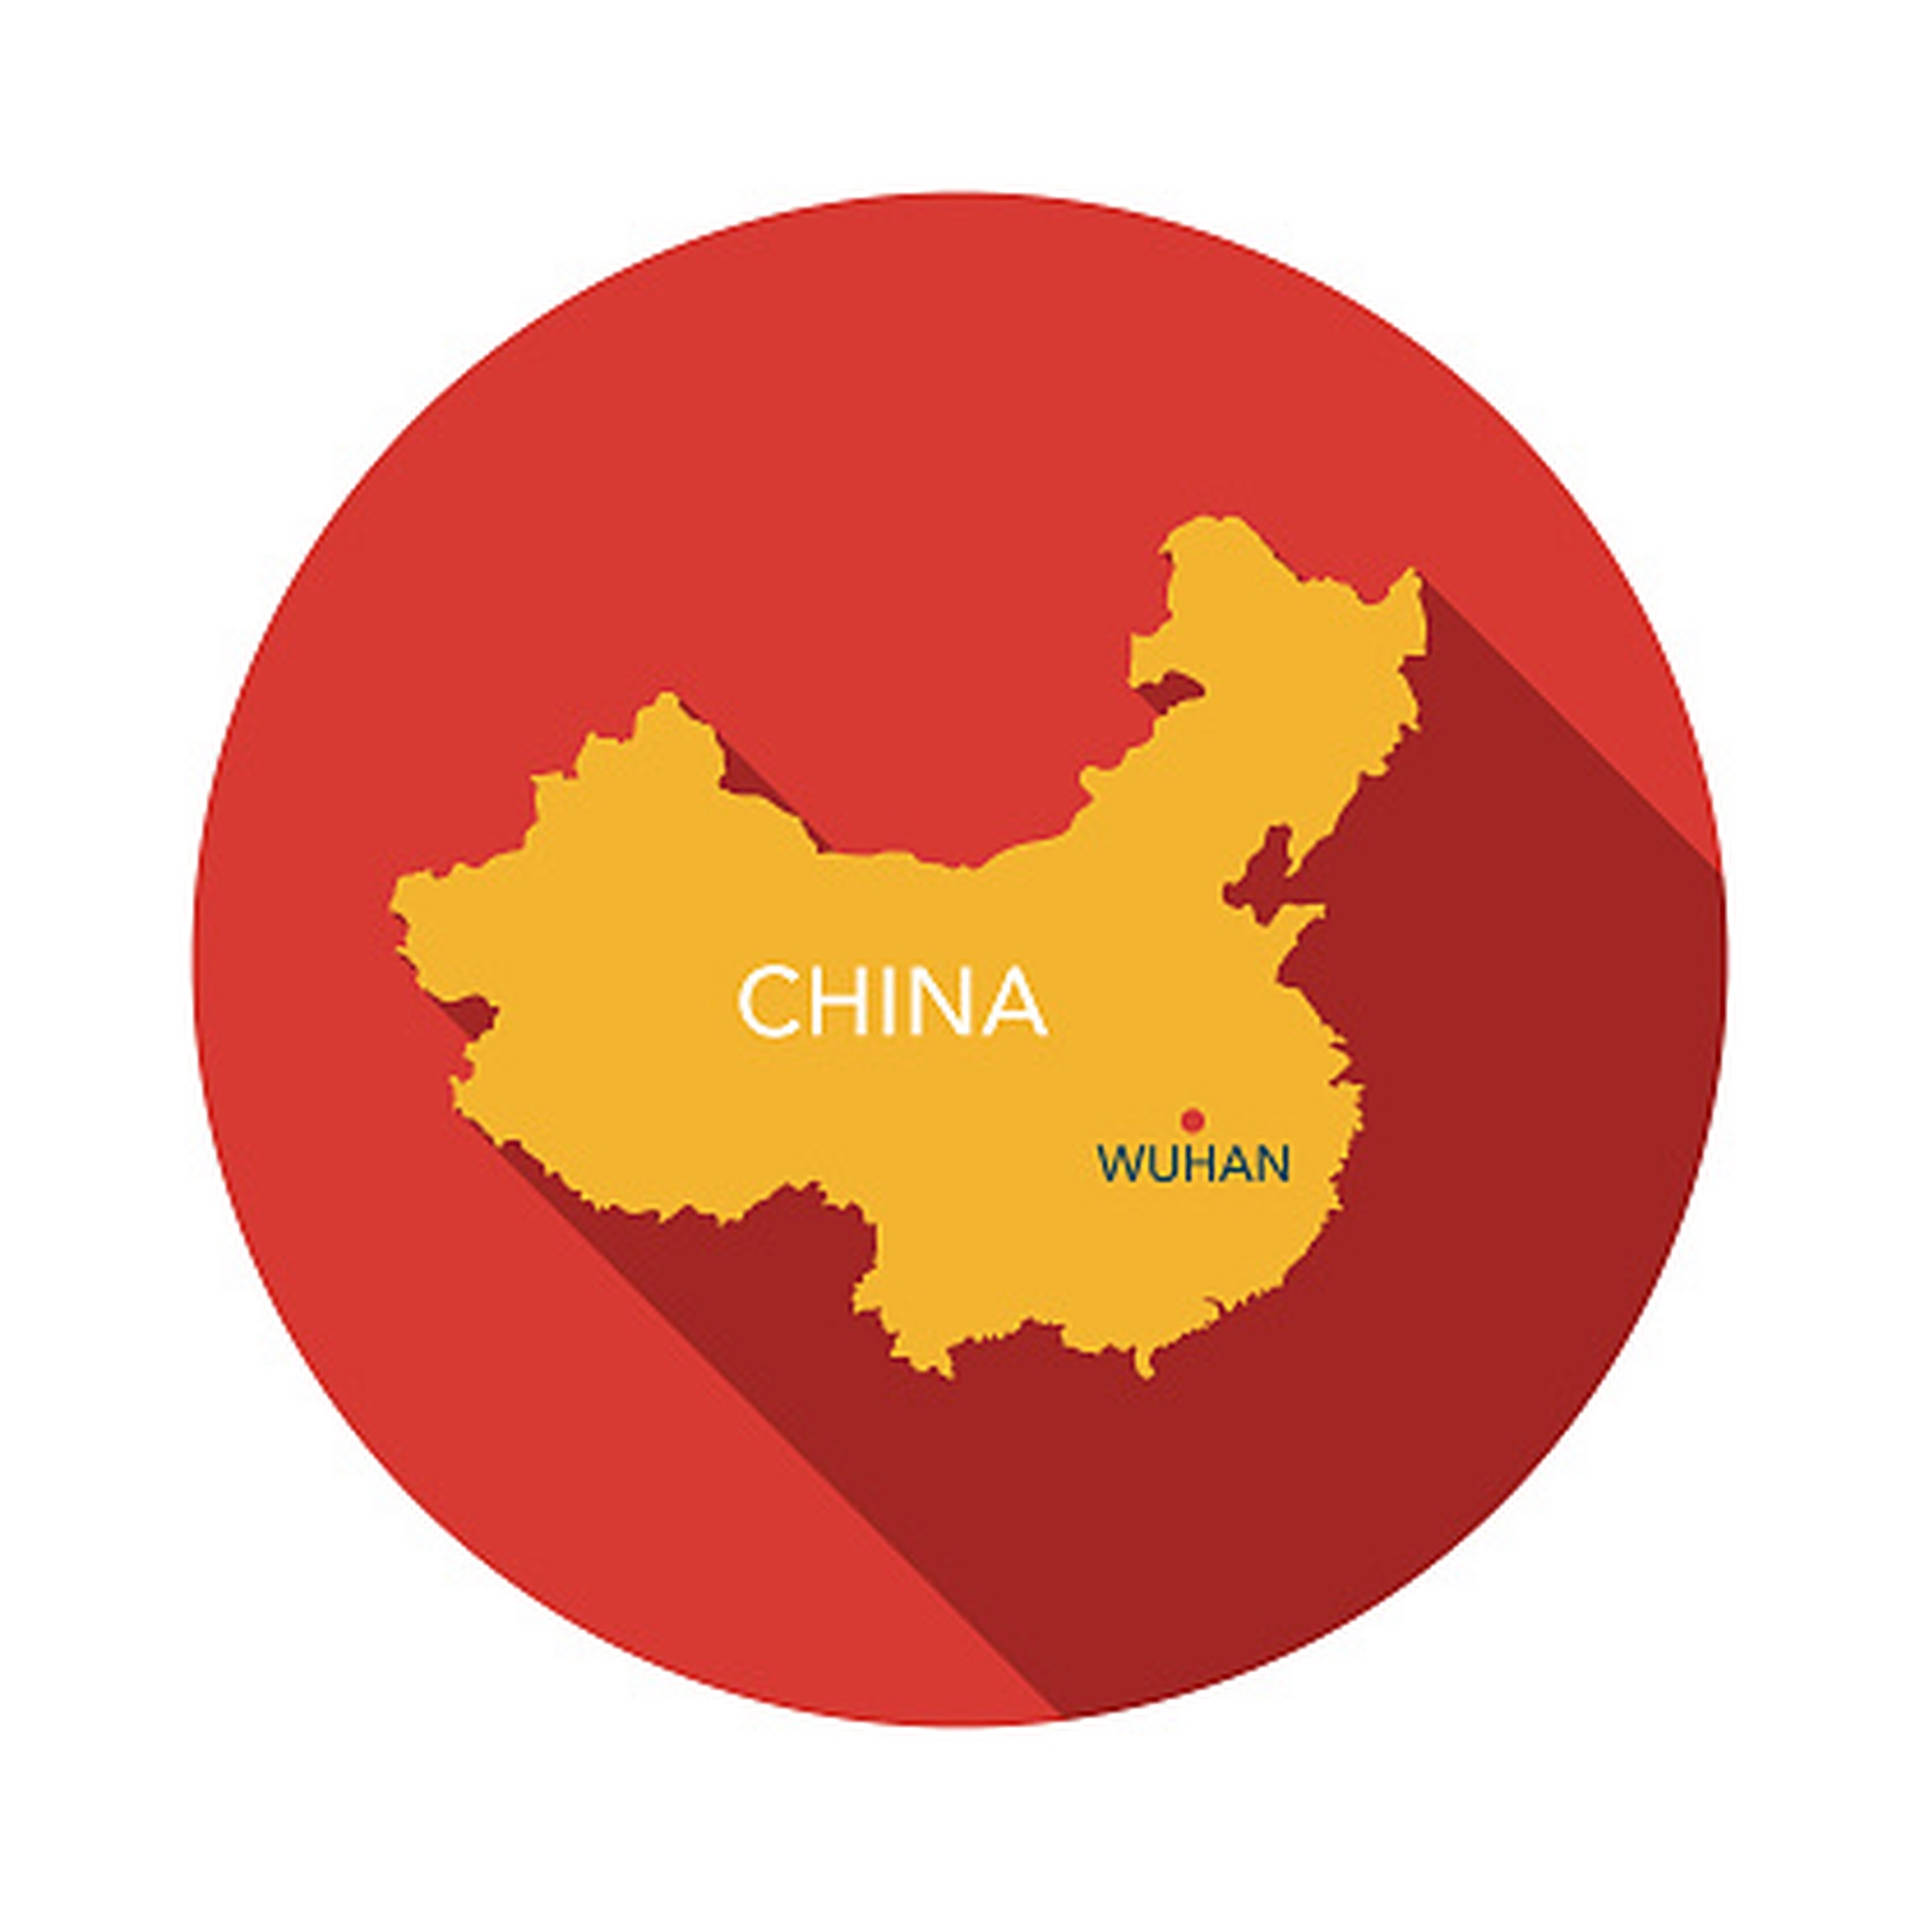 China Wuhan Red Circle Art Background